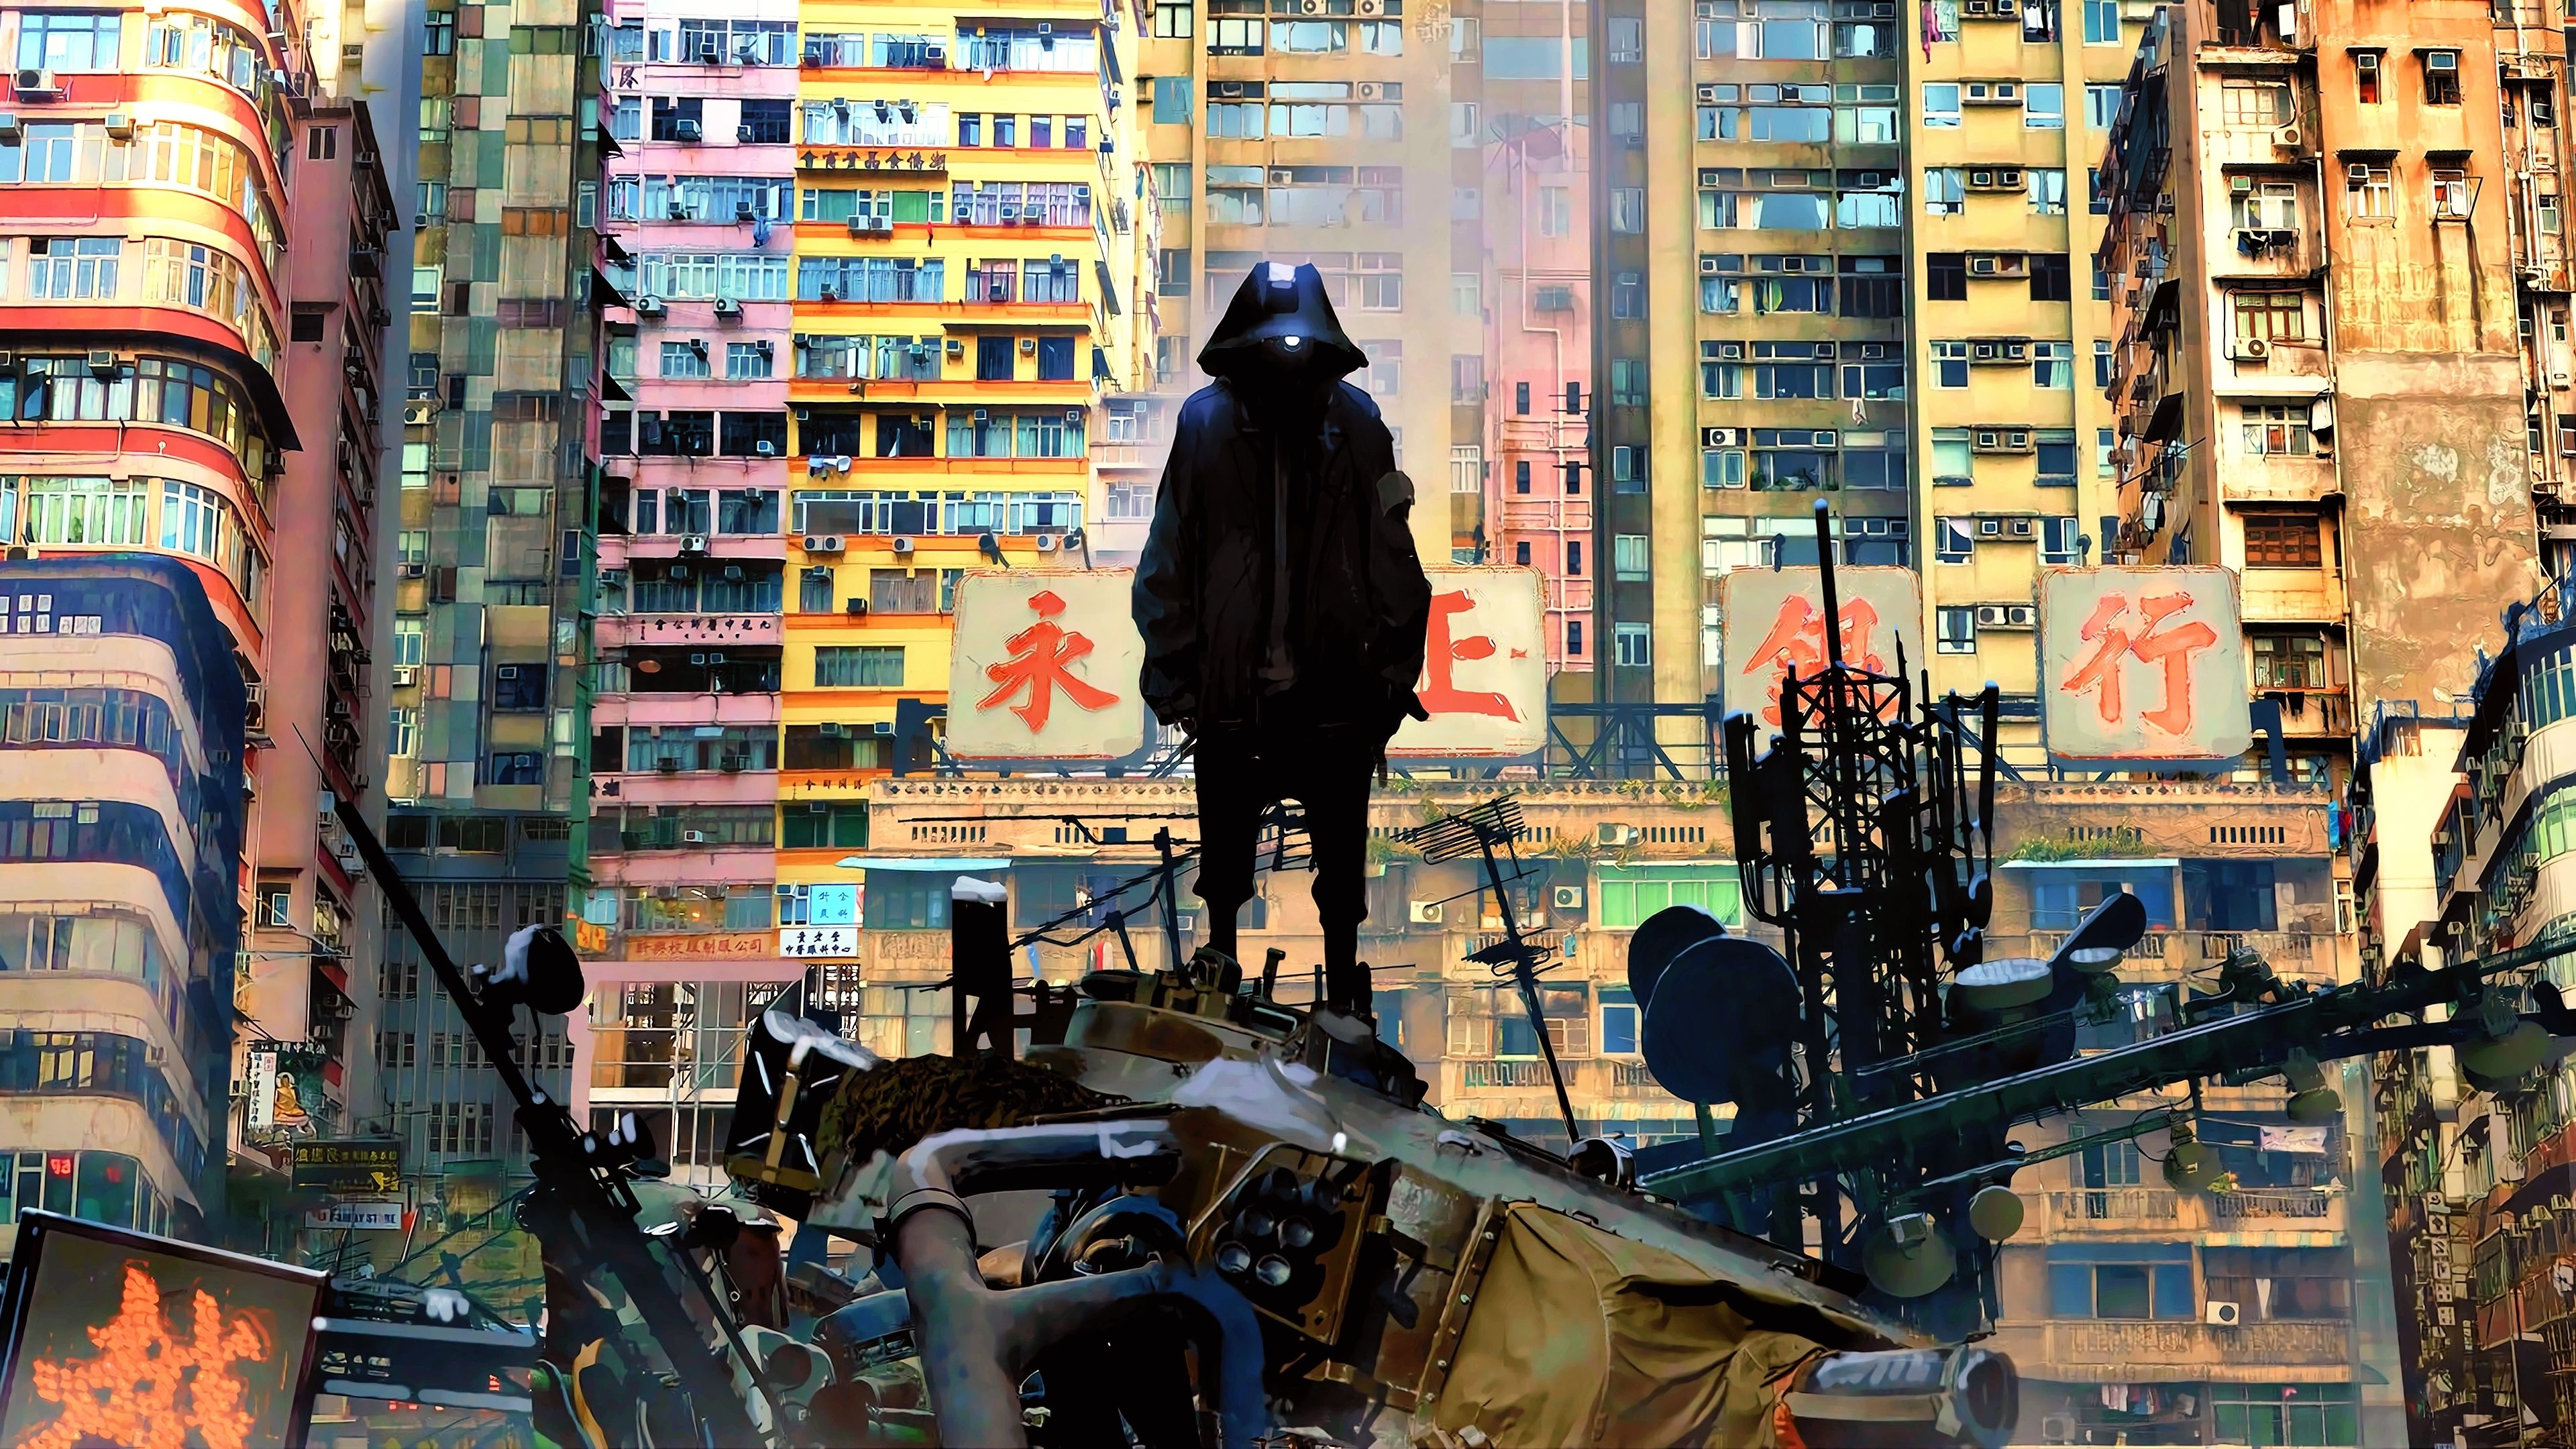 Download 3840x2160 wallpaper cityscape, cyberpunk, man in hood, art, 4k, uhd 16: widescreen, 3840x2160 HD image, background, 22640